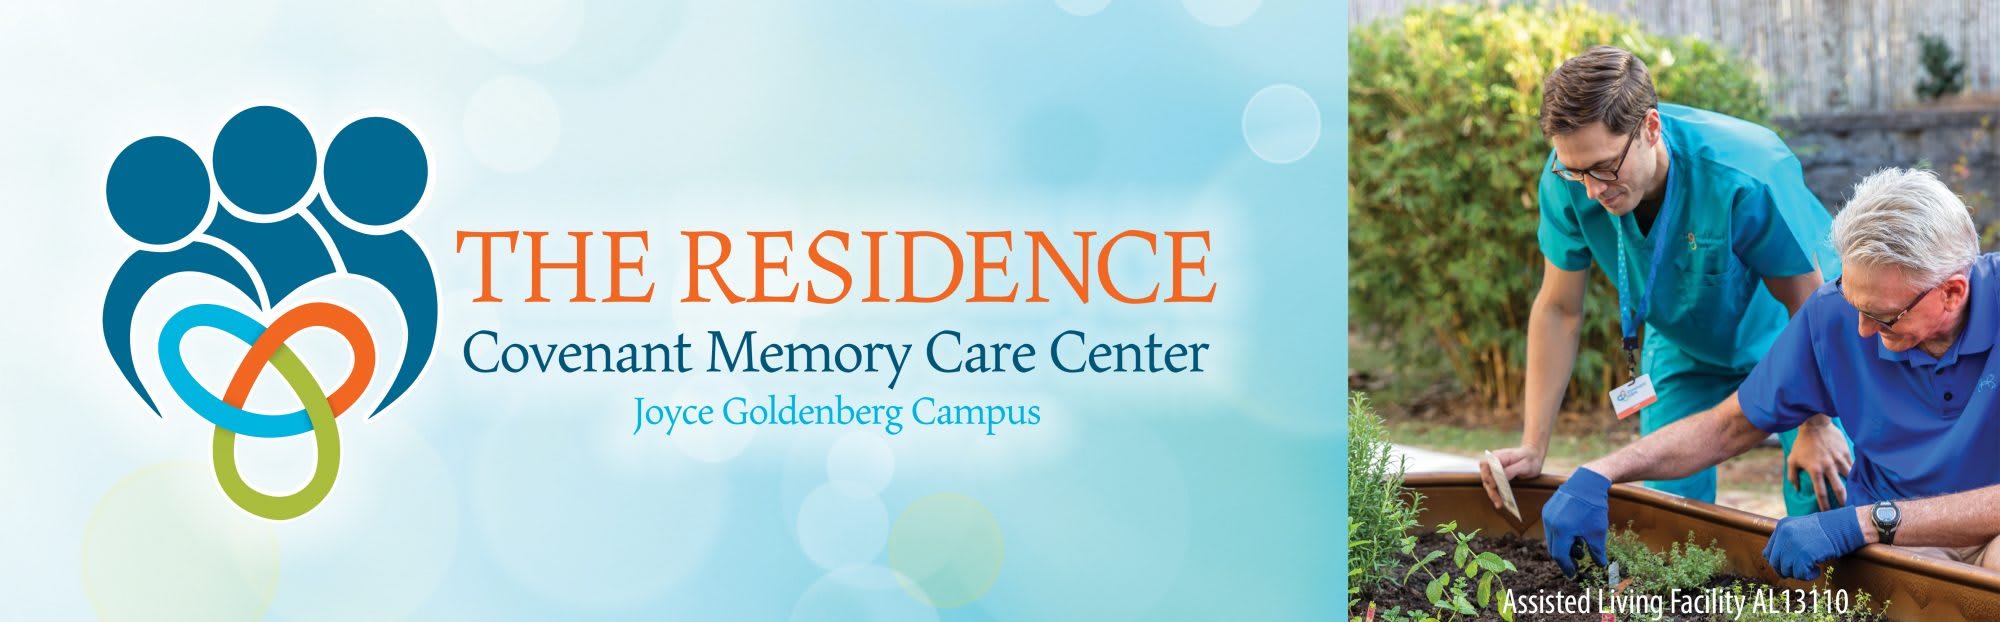 The Residence, Covenant Memory Care Center